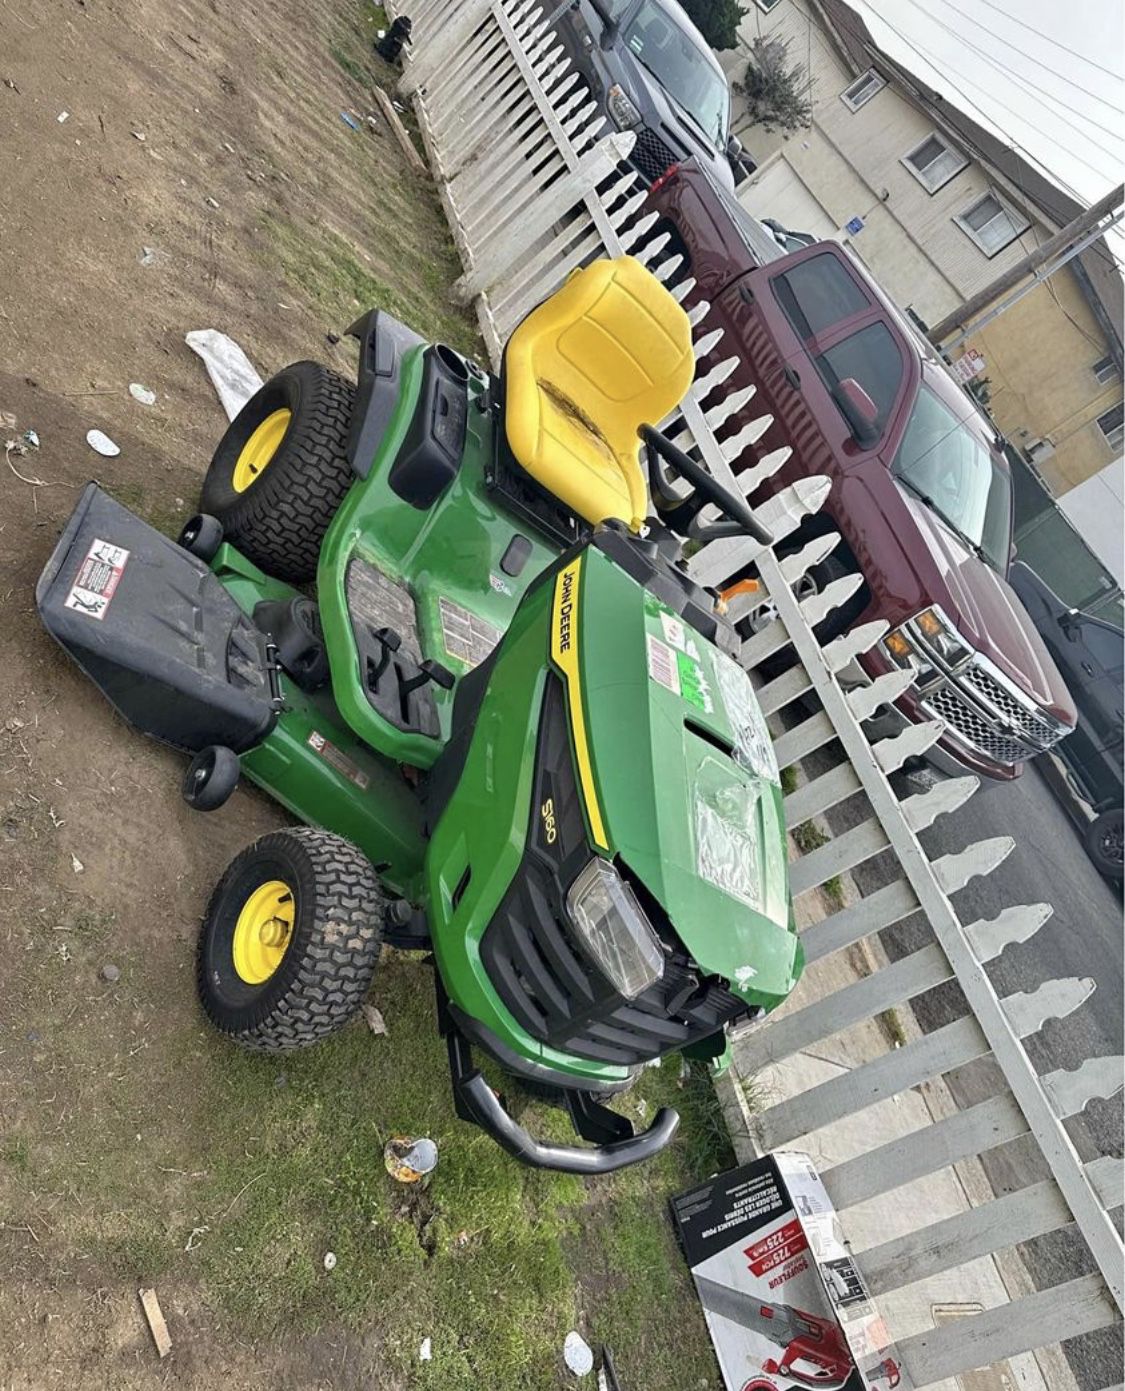 John Deere S160 48 in. 24 HP V-Twin ELS Gas Hydrostatic Riding Lawn Tractor